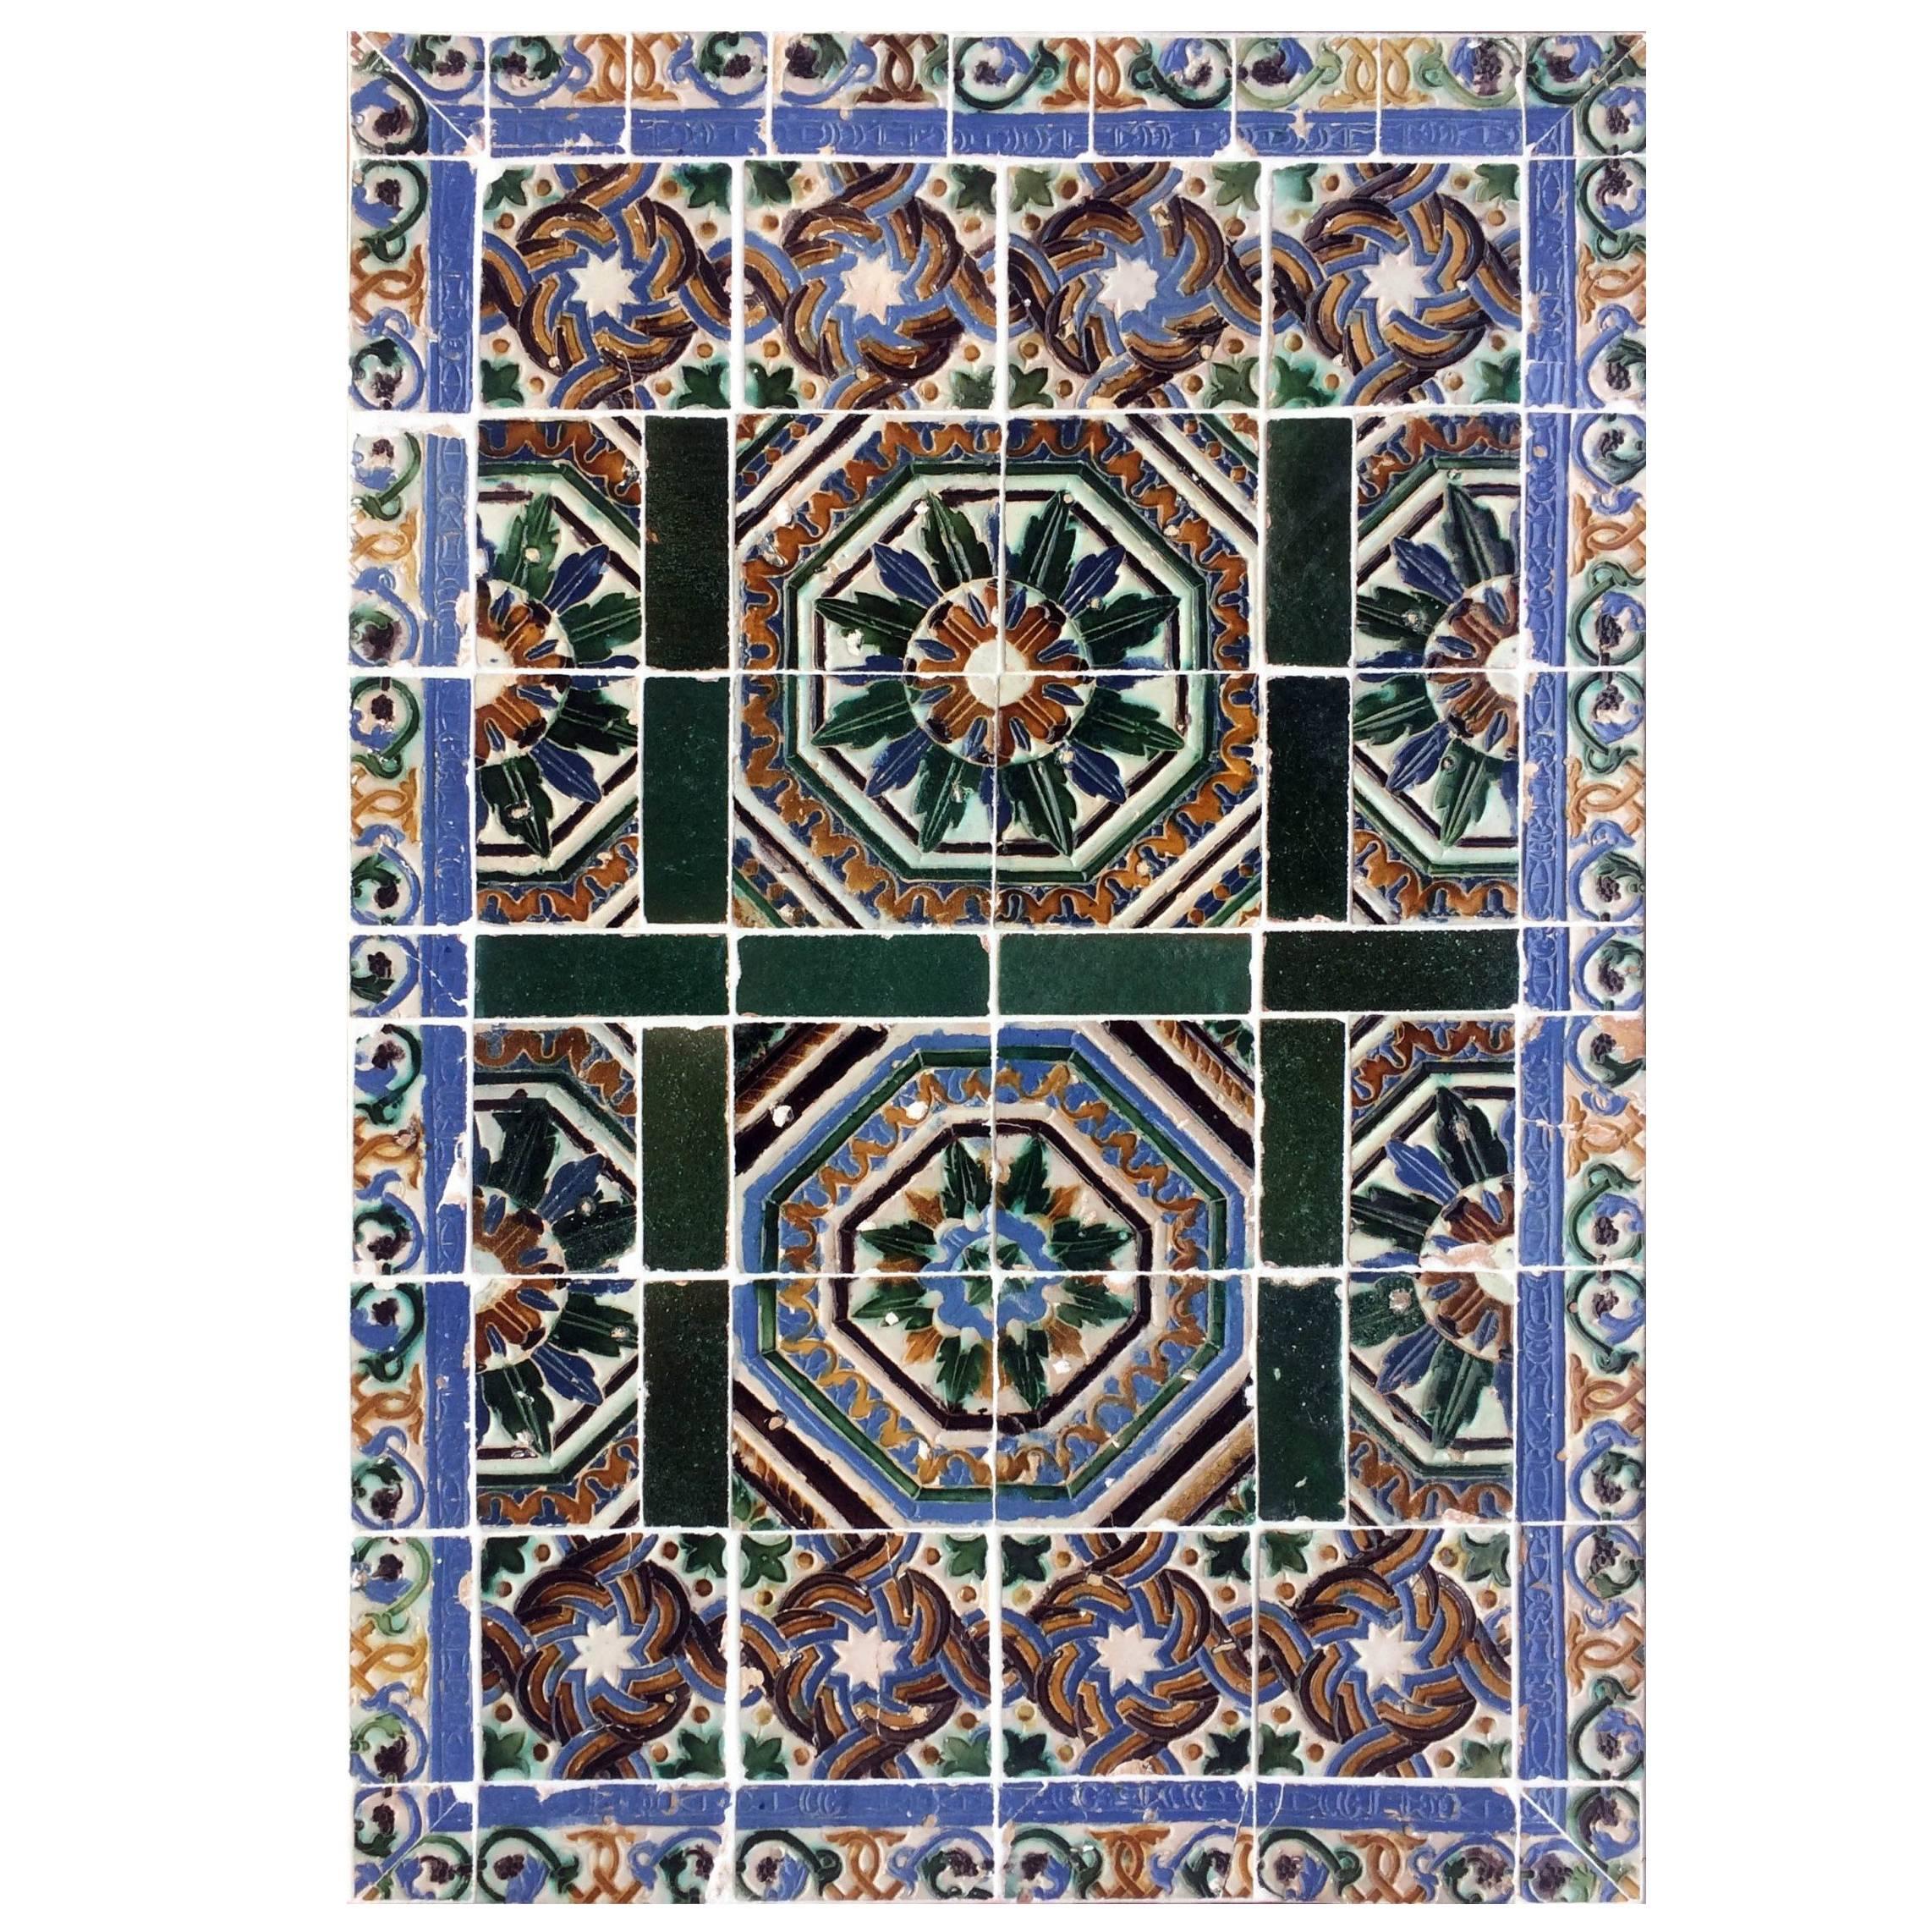 16th Century Hispano-Moresque Tile Panel